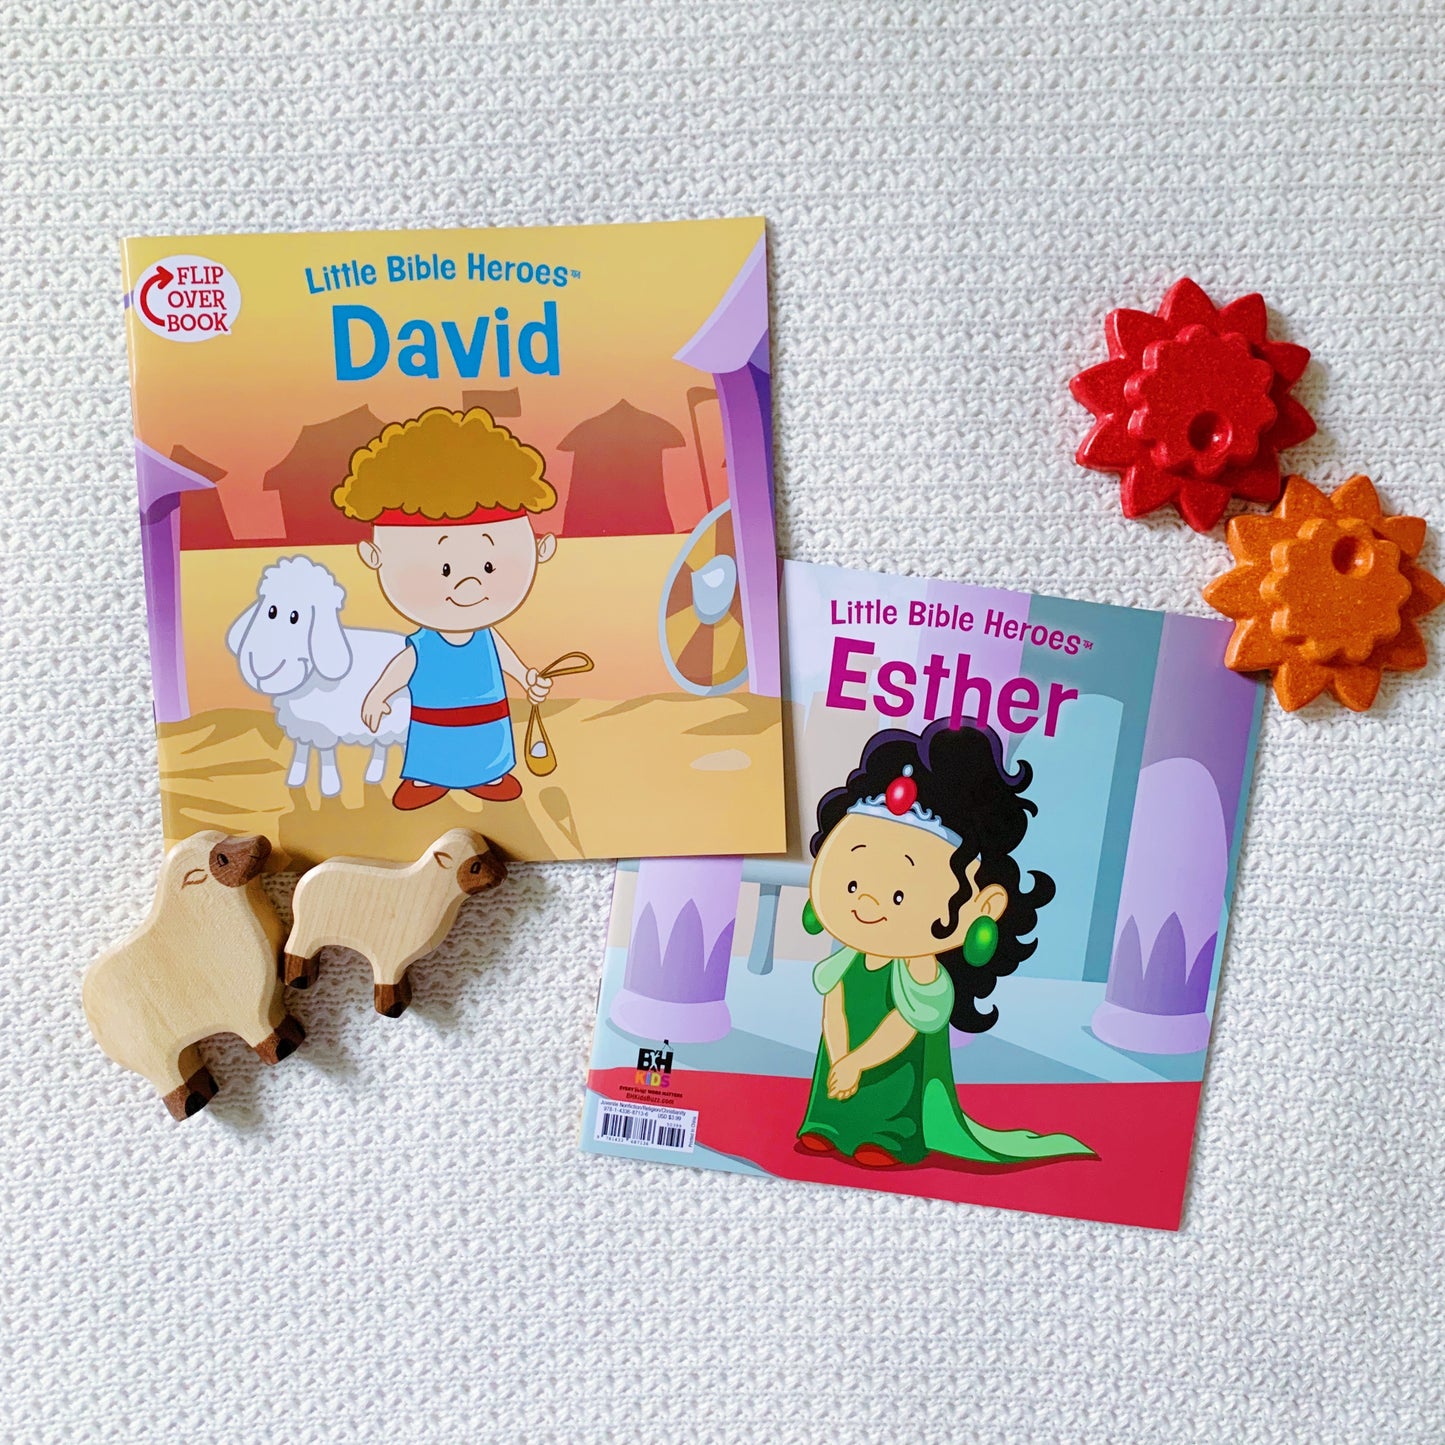 Little Bible Heroes: David + Esther (Flip Over Book)